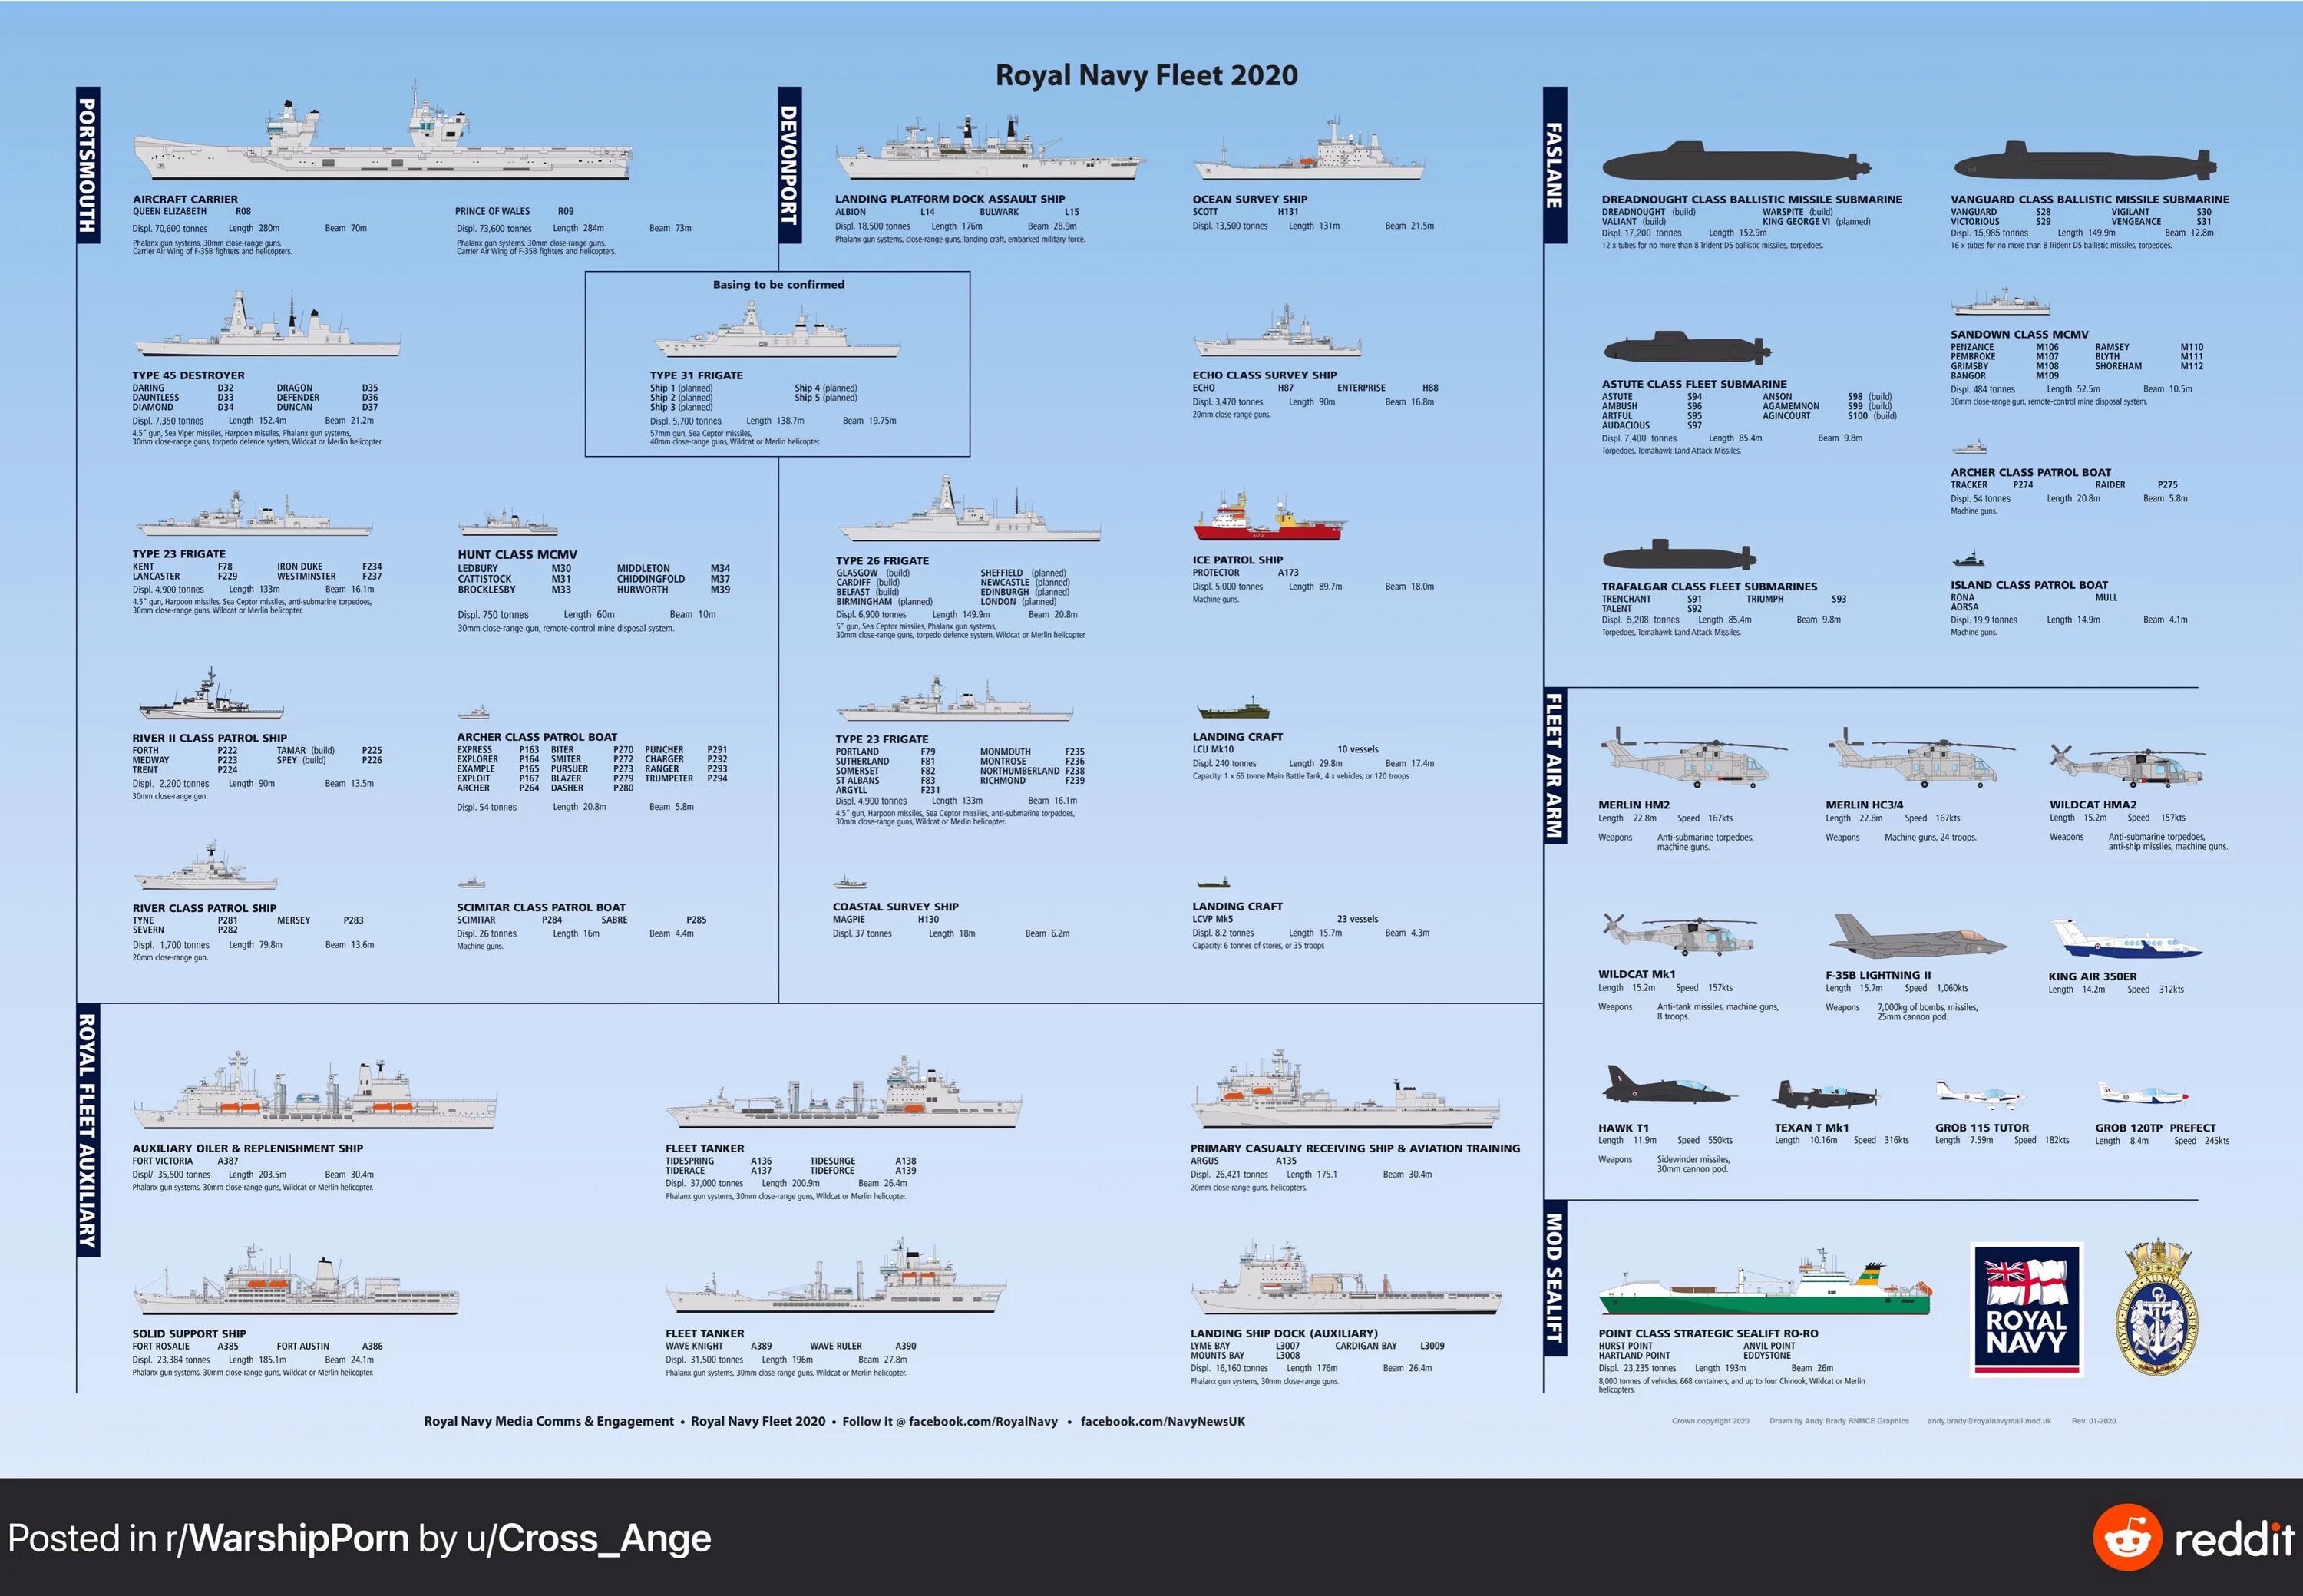 Сравнение флота. Структура ВМС Великобритании. ВМС Великобритании состав 2020. Структура военно-морских сил США. Структура ВМС США.